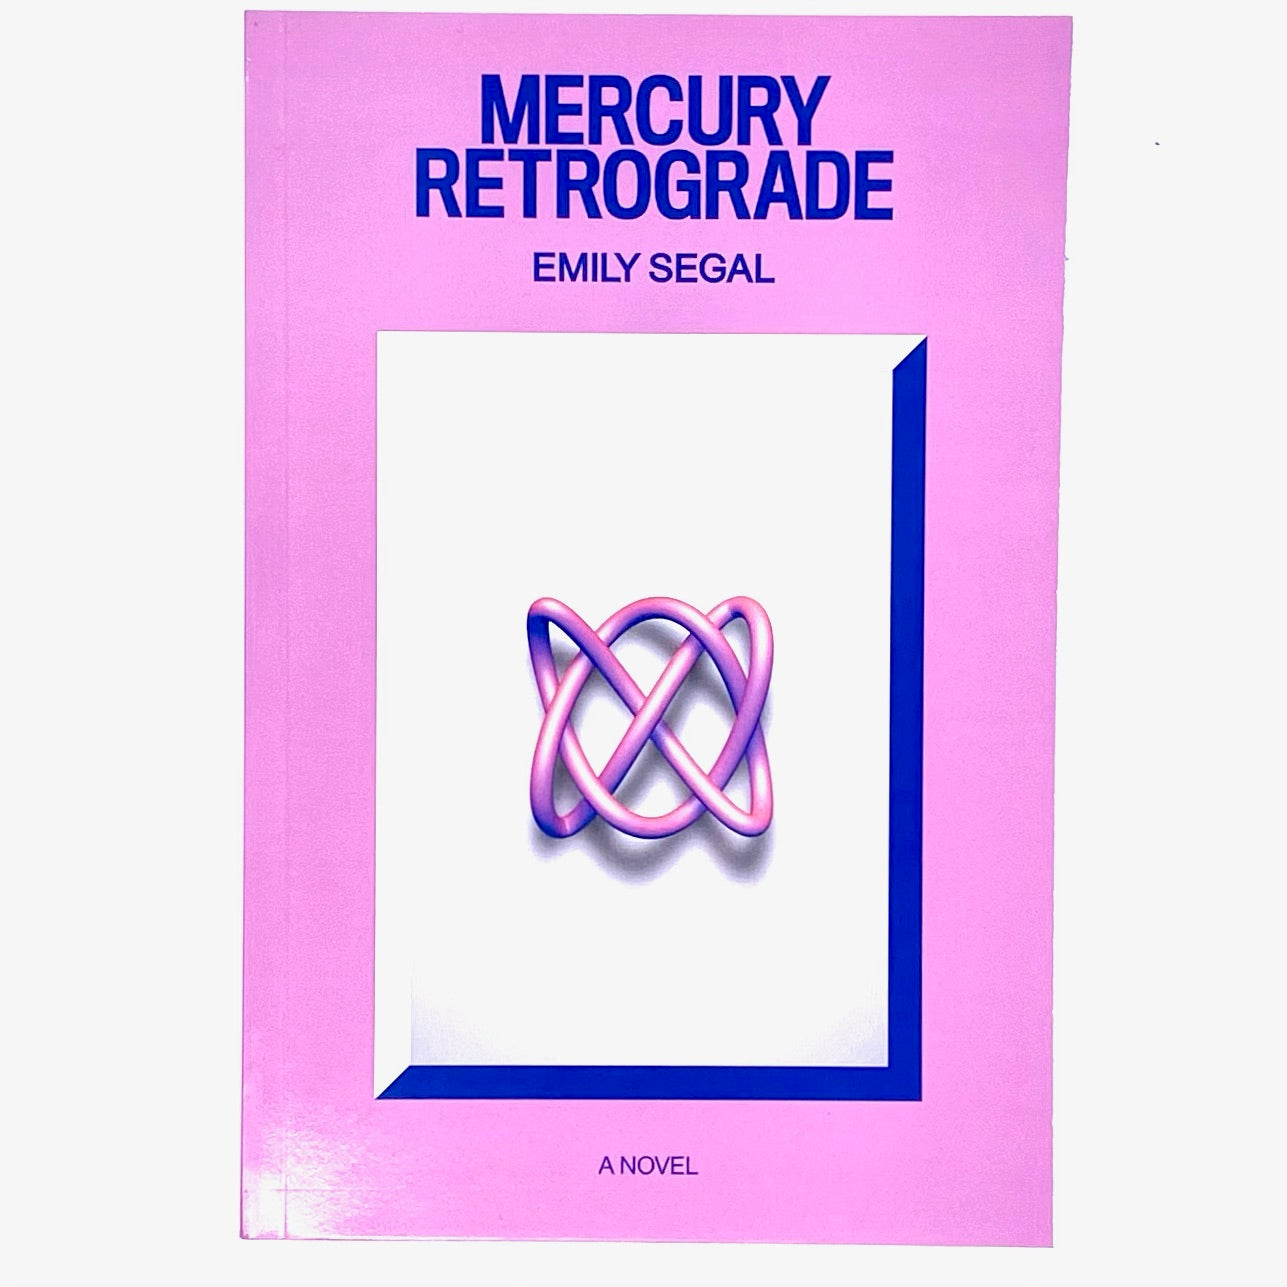 Book cover of Mercury Retrograde by Emily Segal.